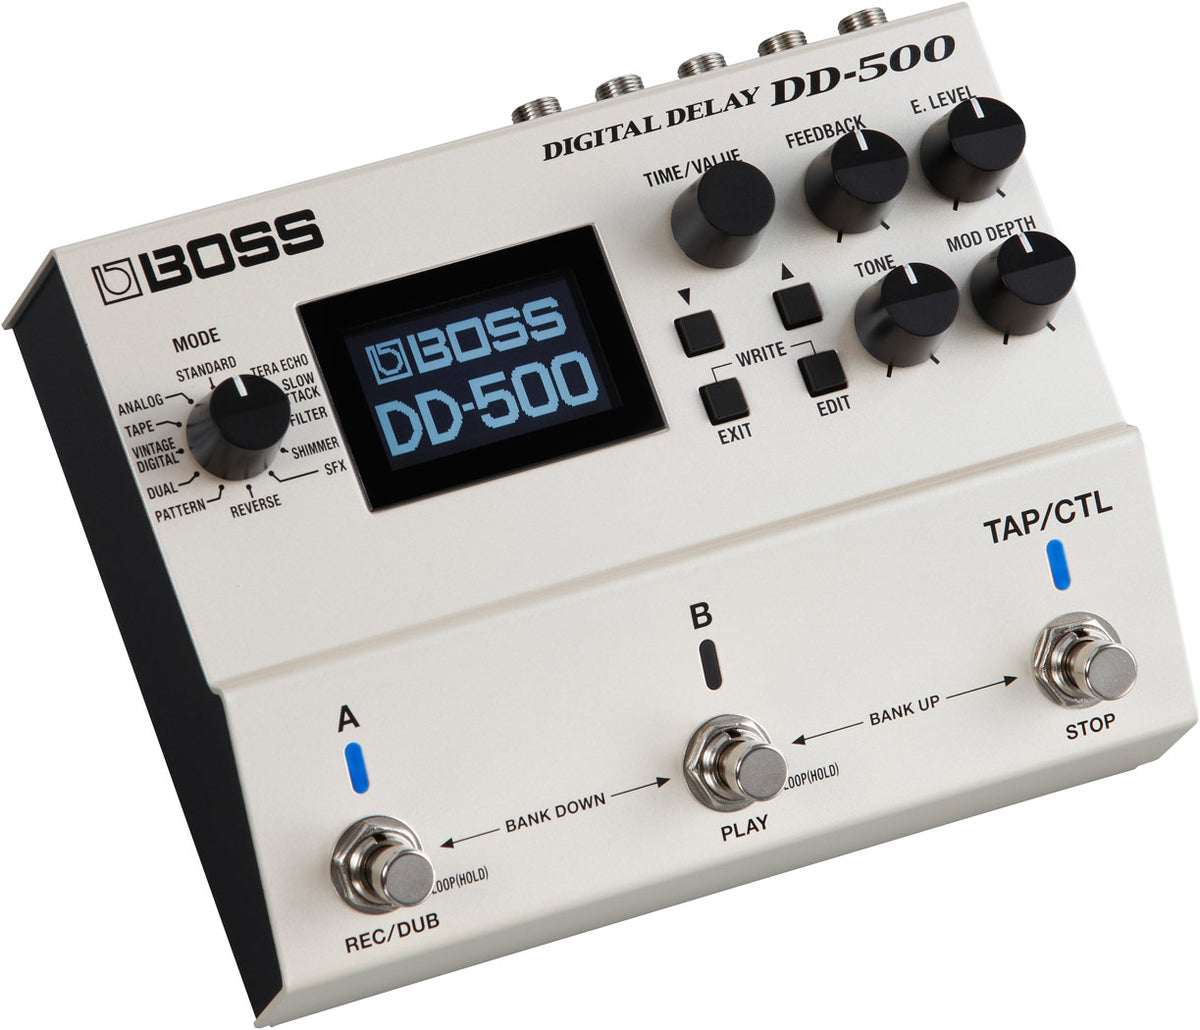 BOSS DD-500 Digital Delay Best Guitar Effects Pedal with 12 Delay Modes, Built-in Phrase Looper, MIDI, USB